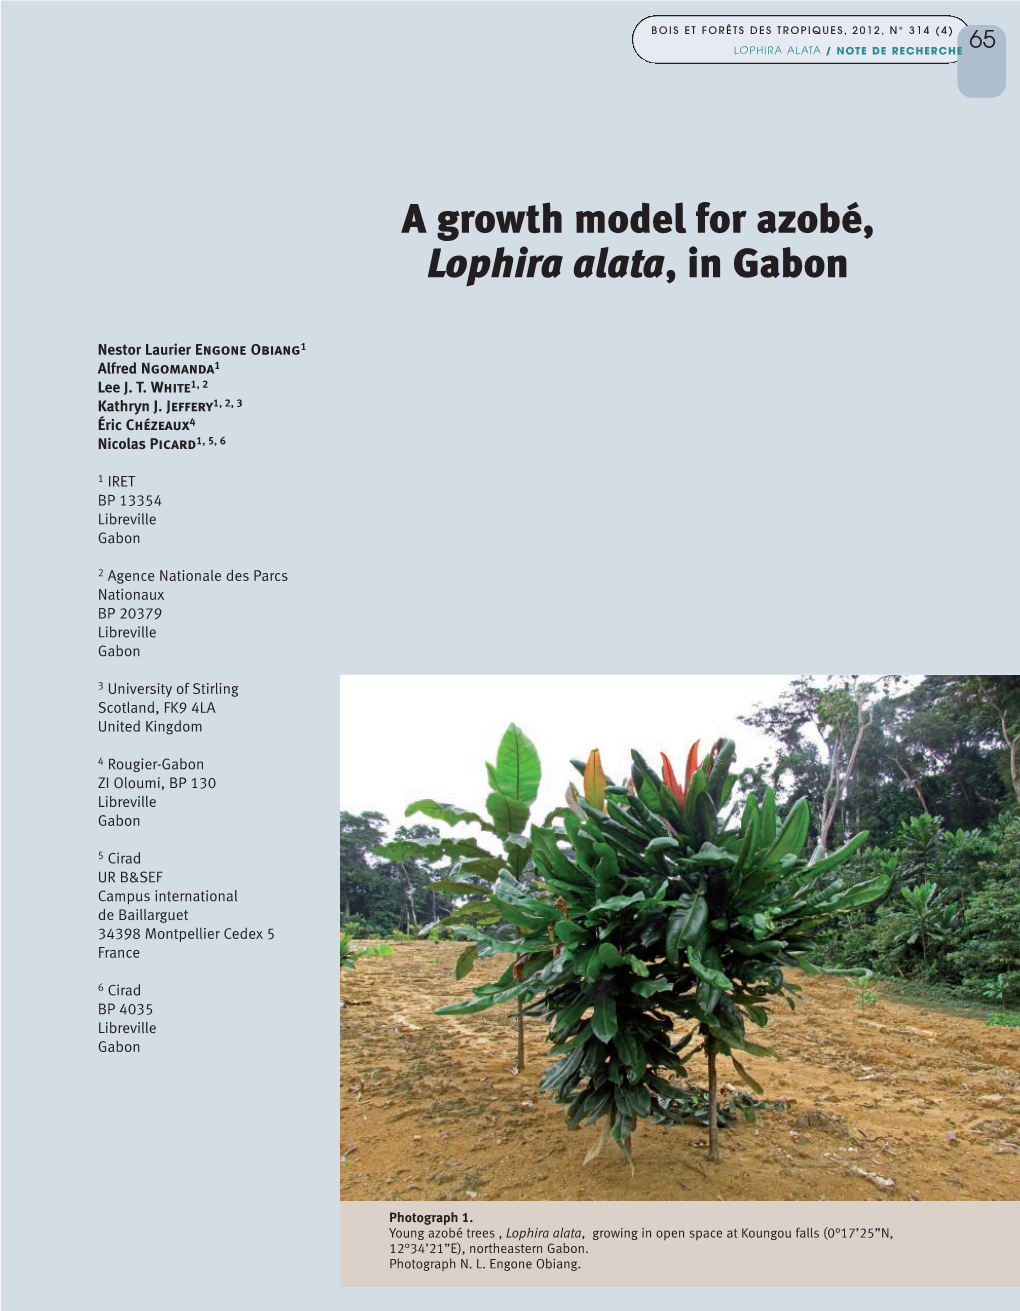 A Growth Model for Azobé, Lophira Alata, in Gabon